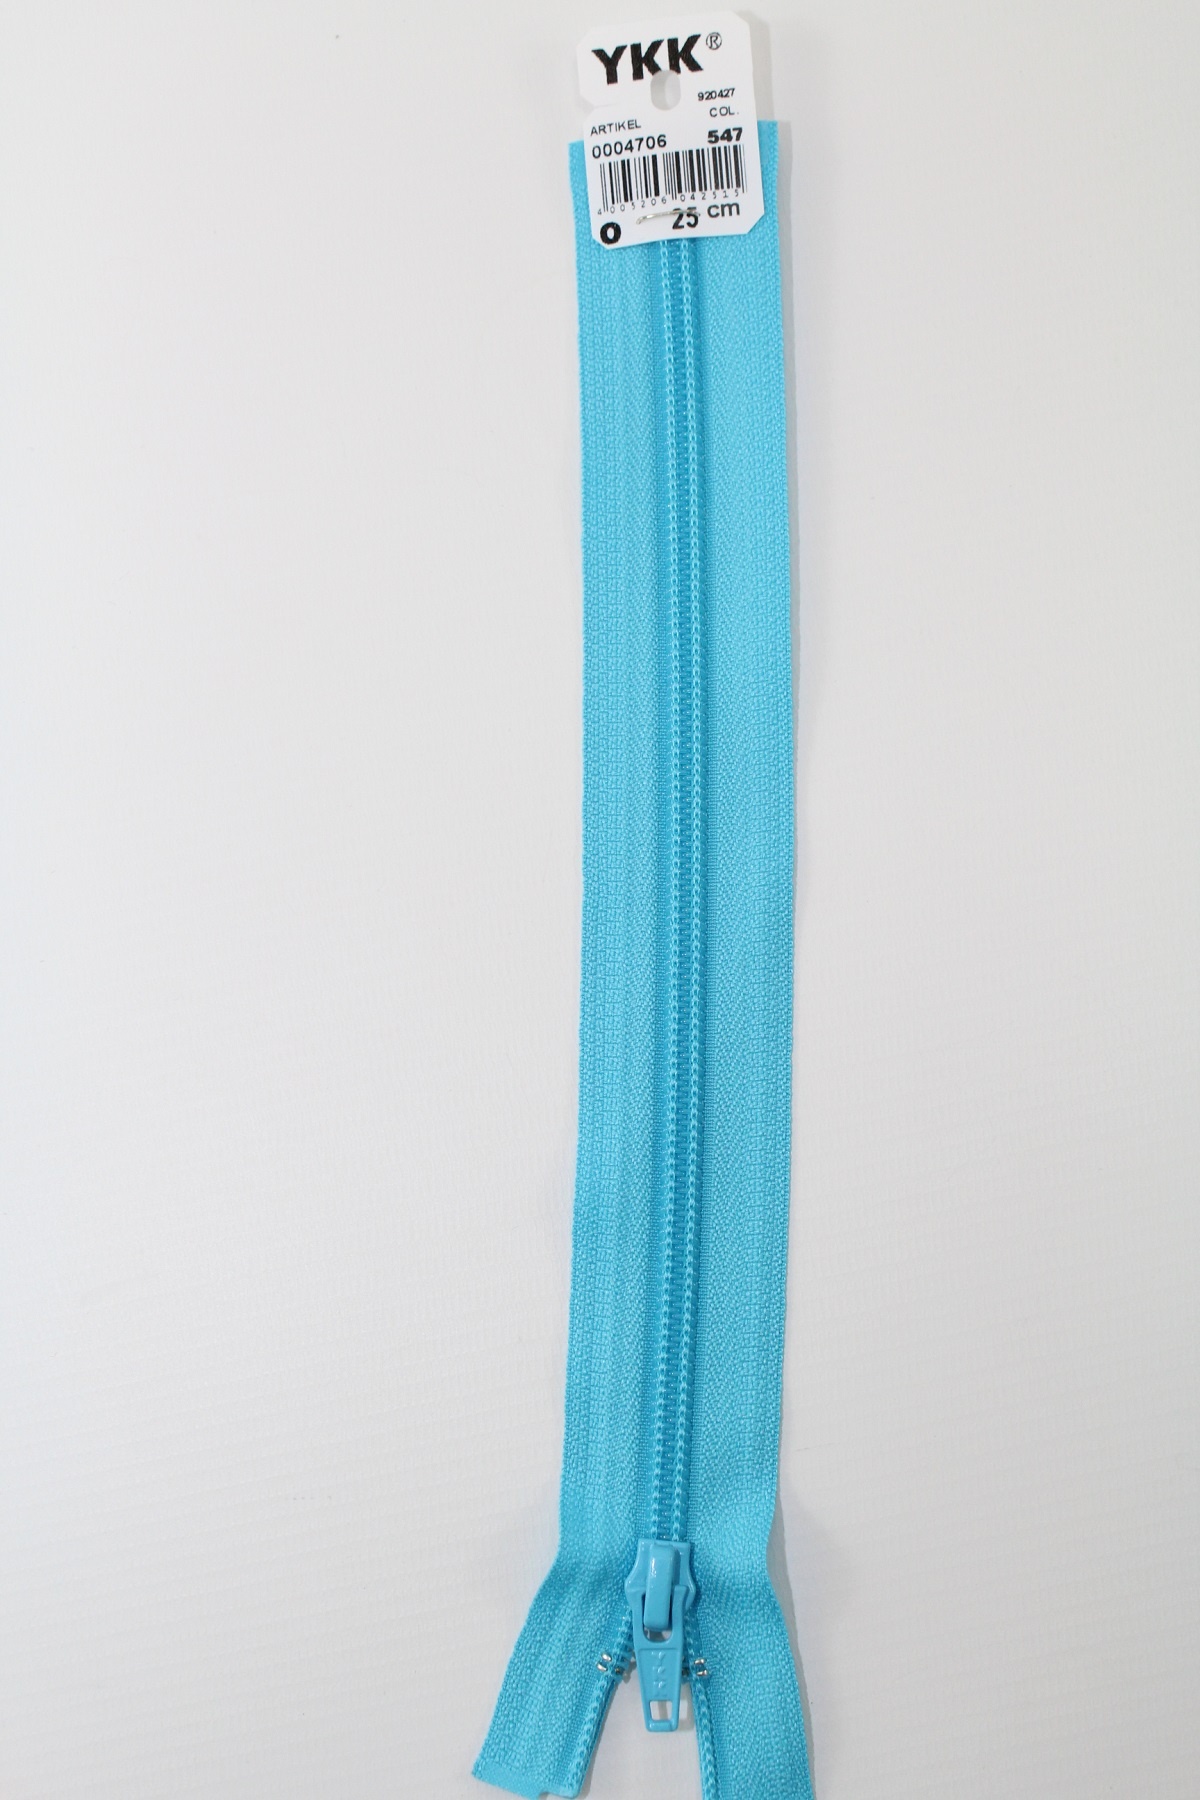 YKK - Reissverschlüsse 25 cm - 80 cm, teilbar, wasserblau